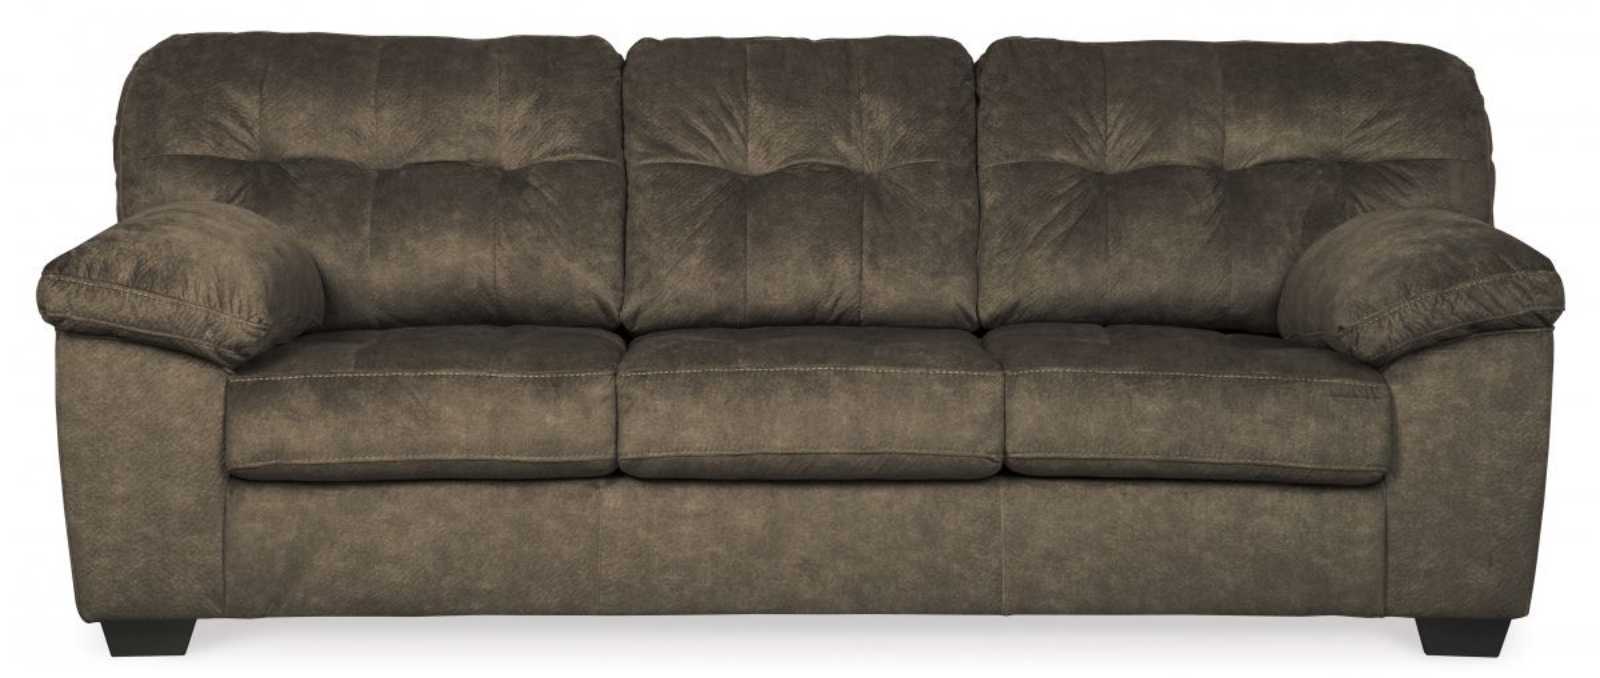 Picture of Accrington Sofa